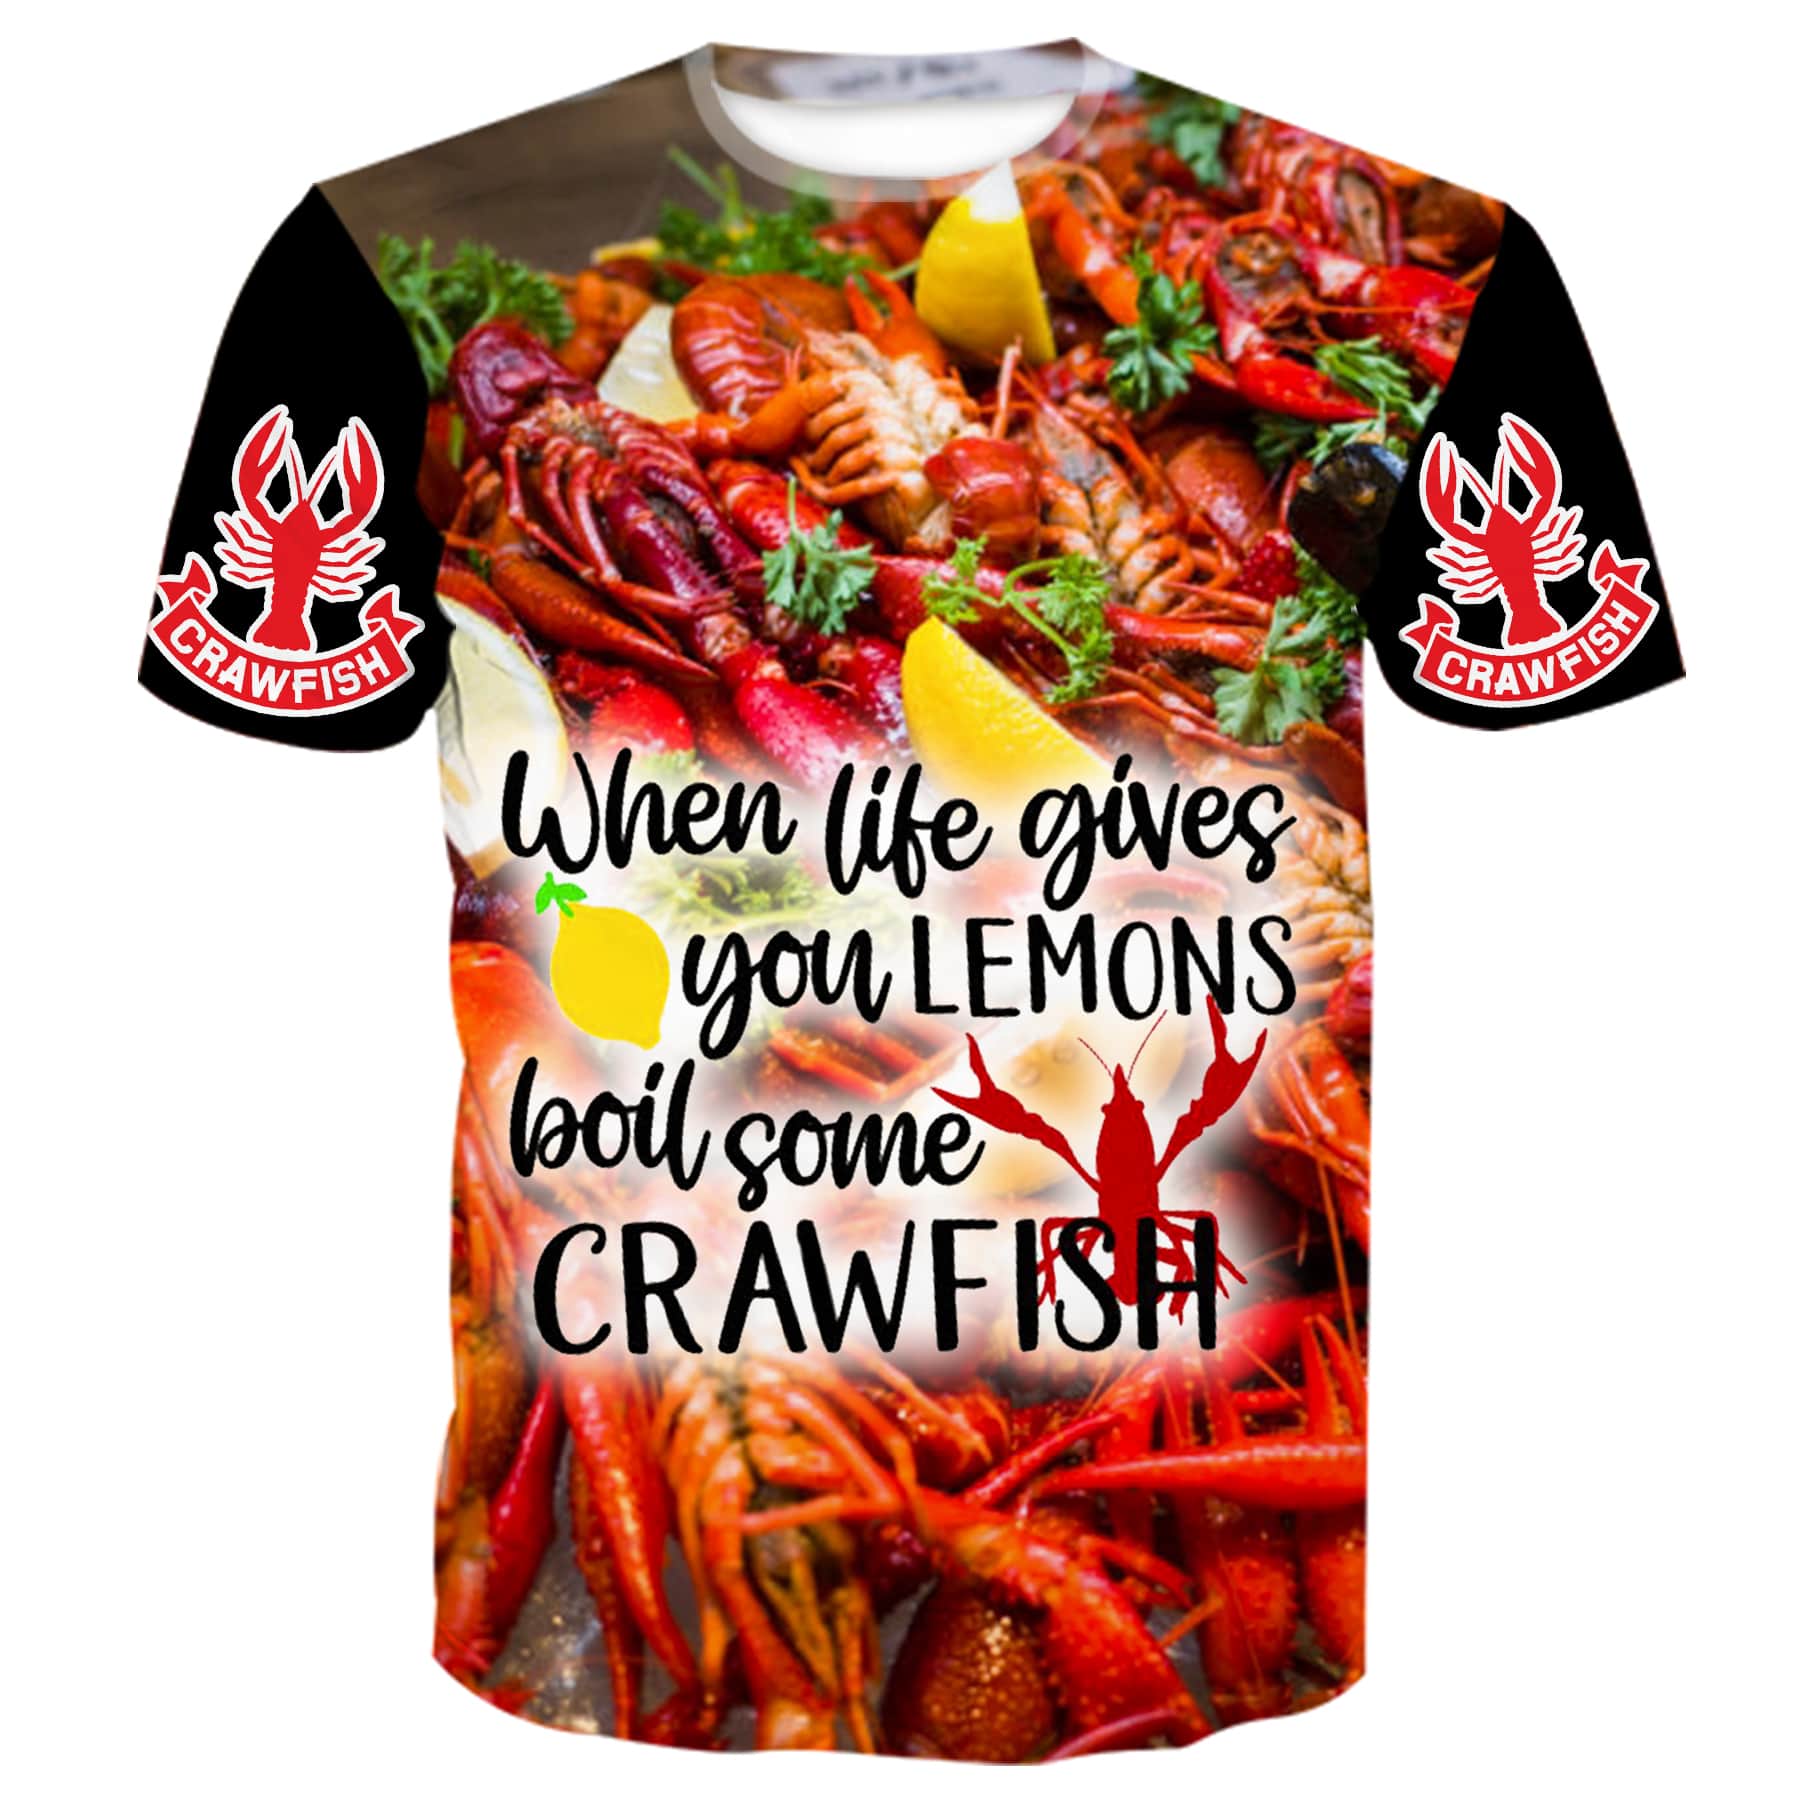 When life gives you lemons boil some Crawfish- T-Shirt